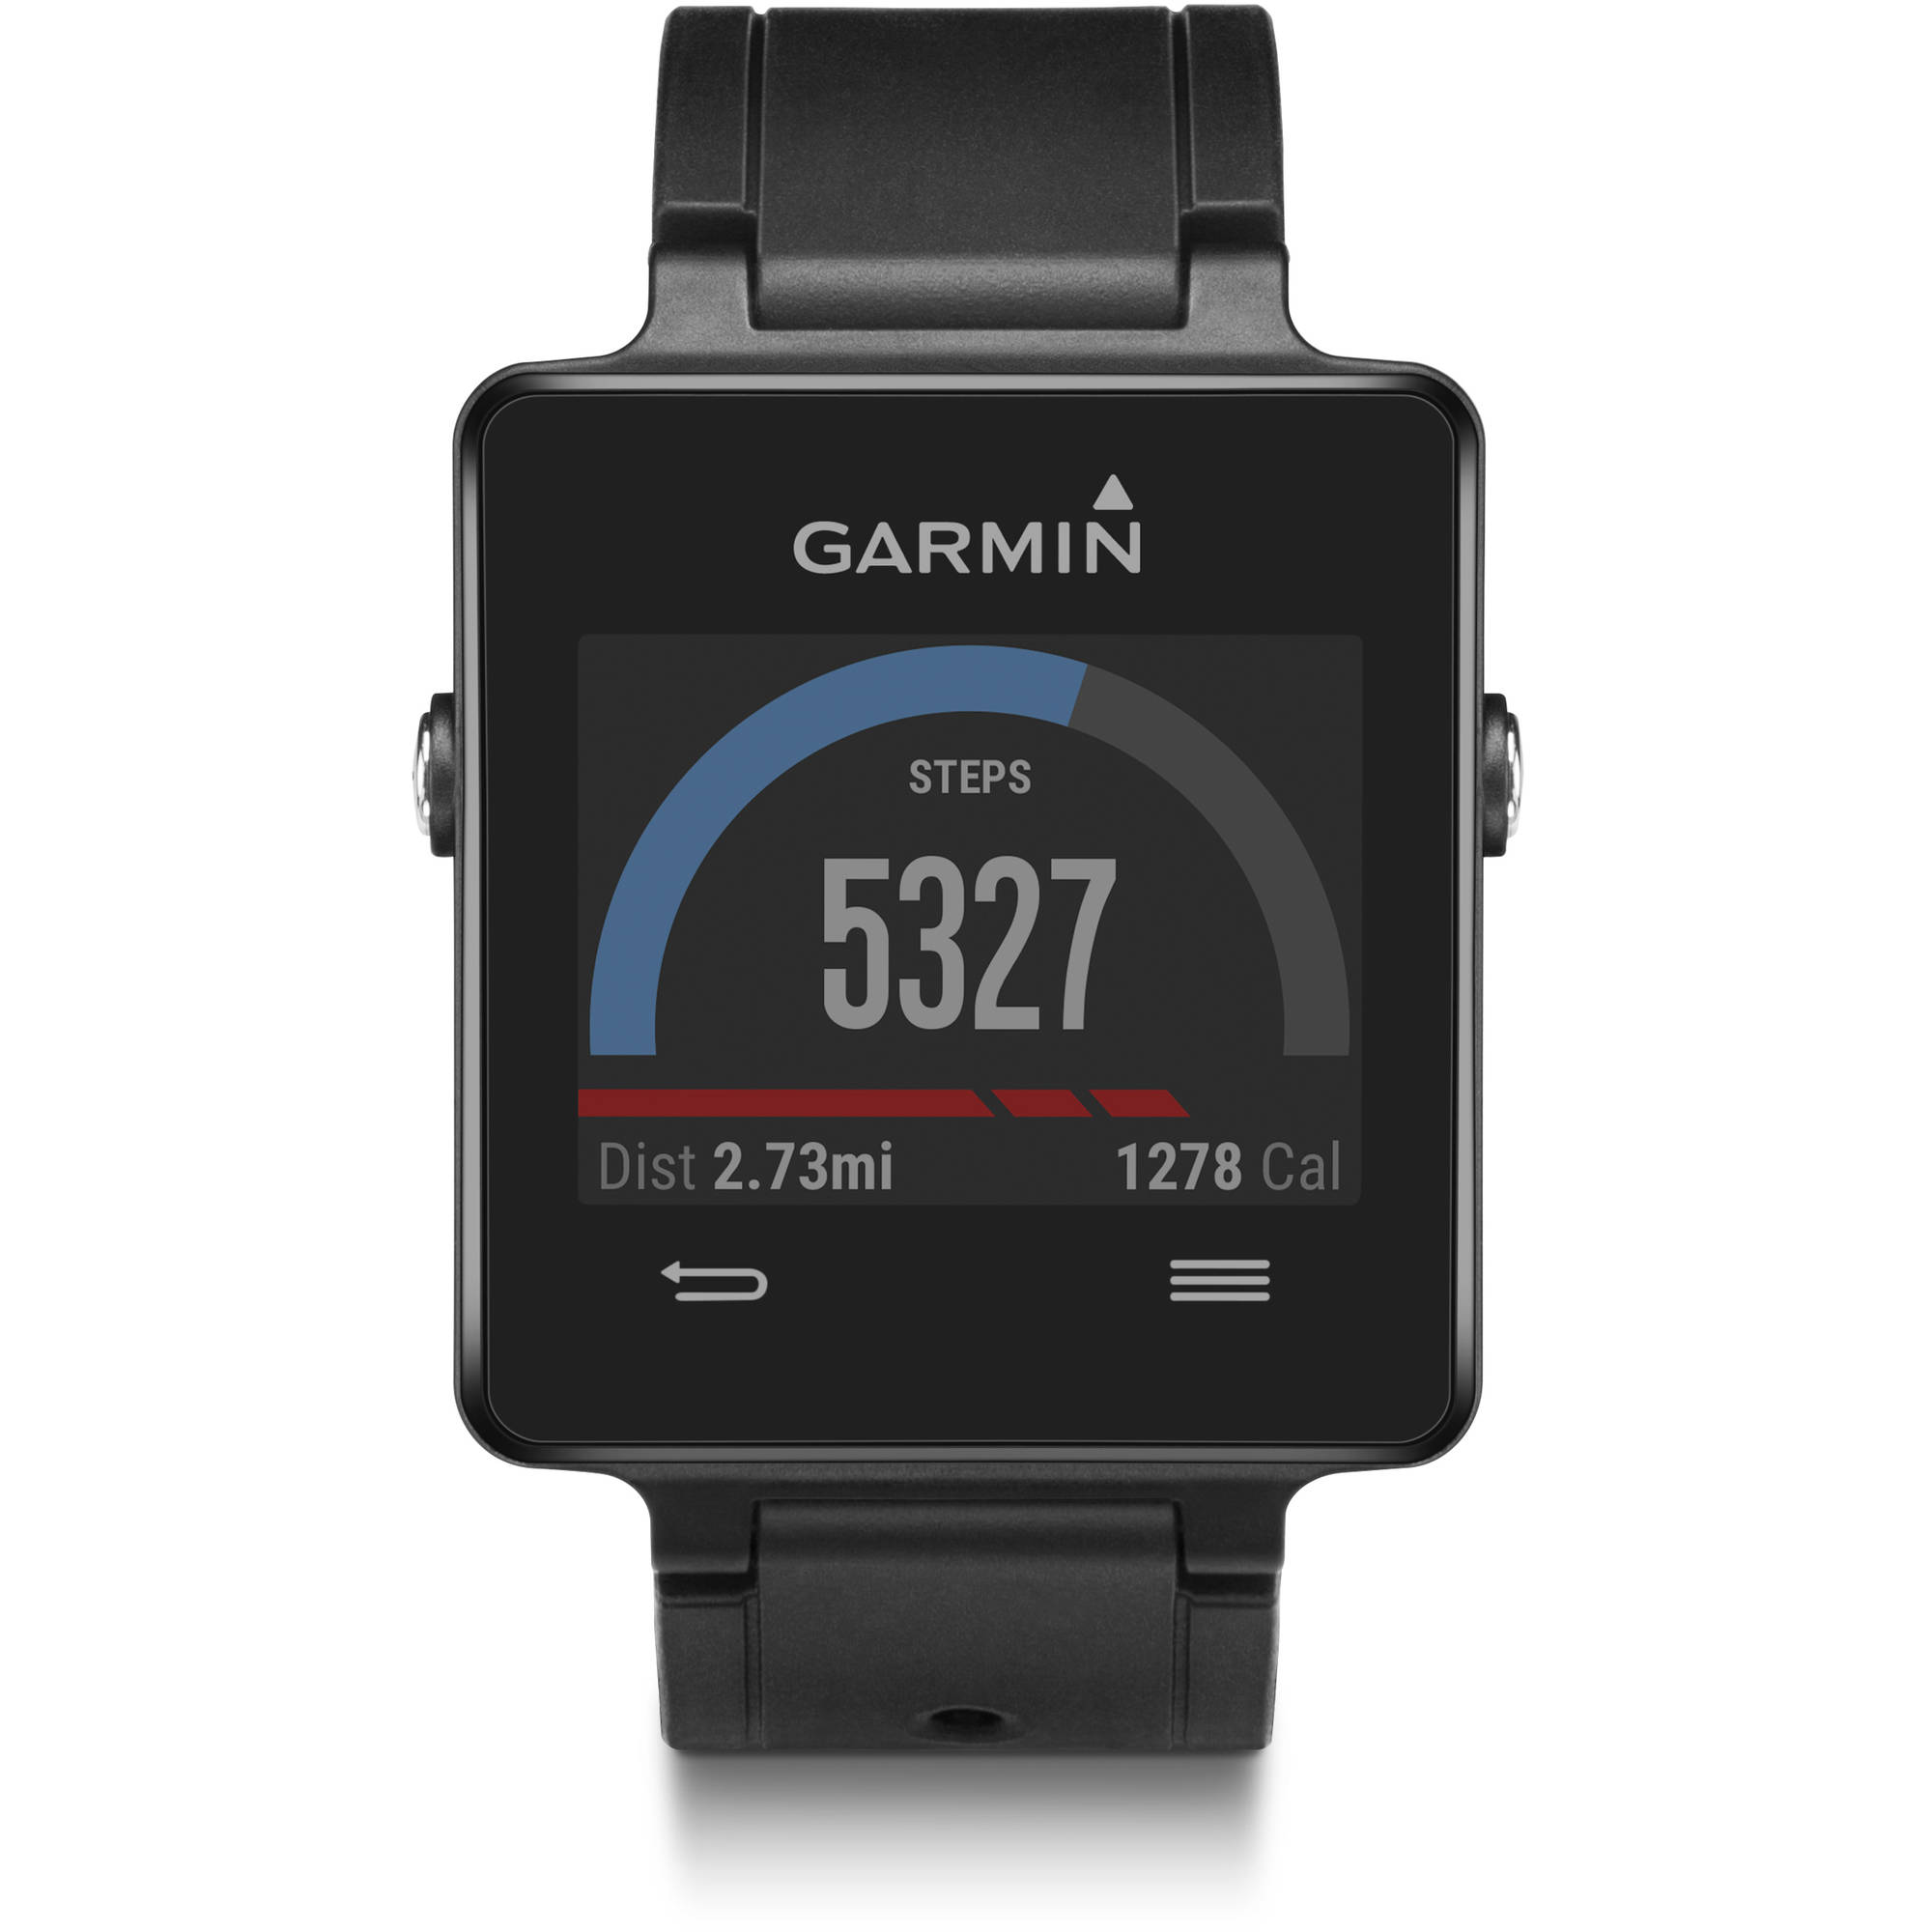 Garmin Vivoactive Smartwatch GPS / Activity Tracker / Pedometer / Sleep Monitor with Phone Notifications, Black (fits wrists 5.35-9.25") - image 3 of 3